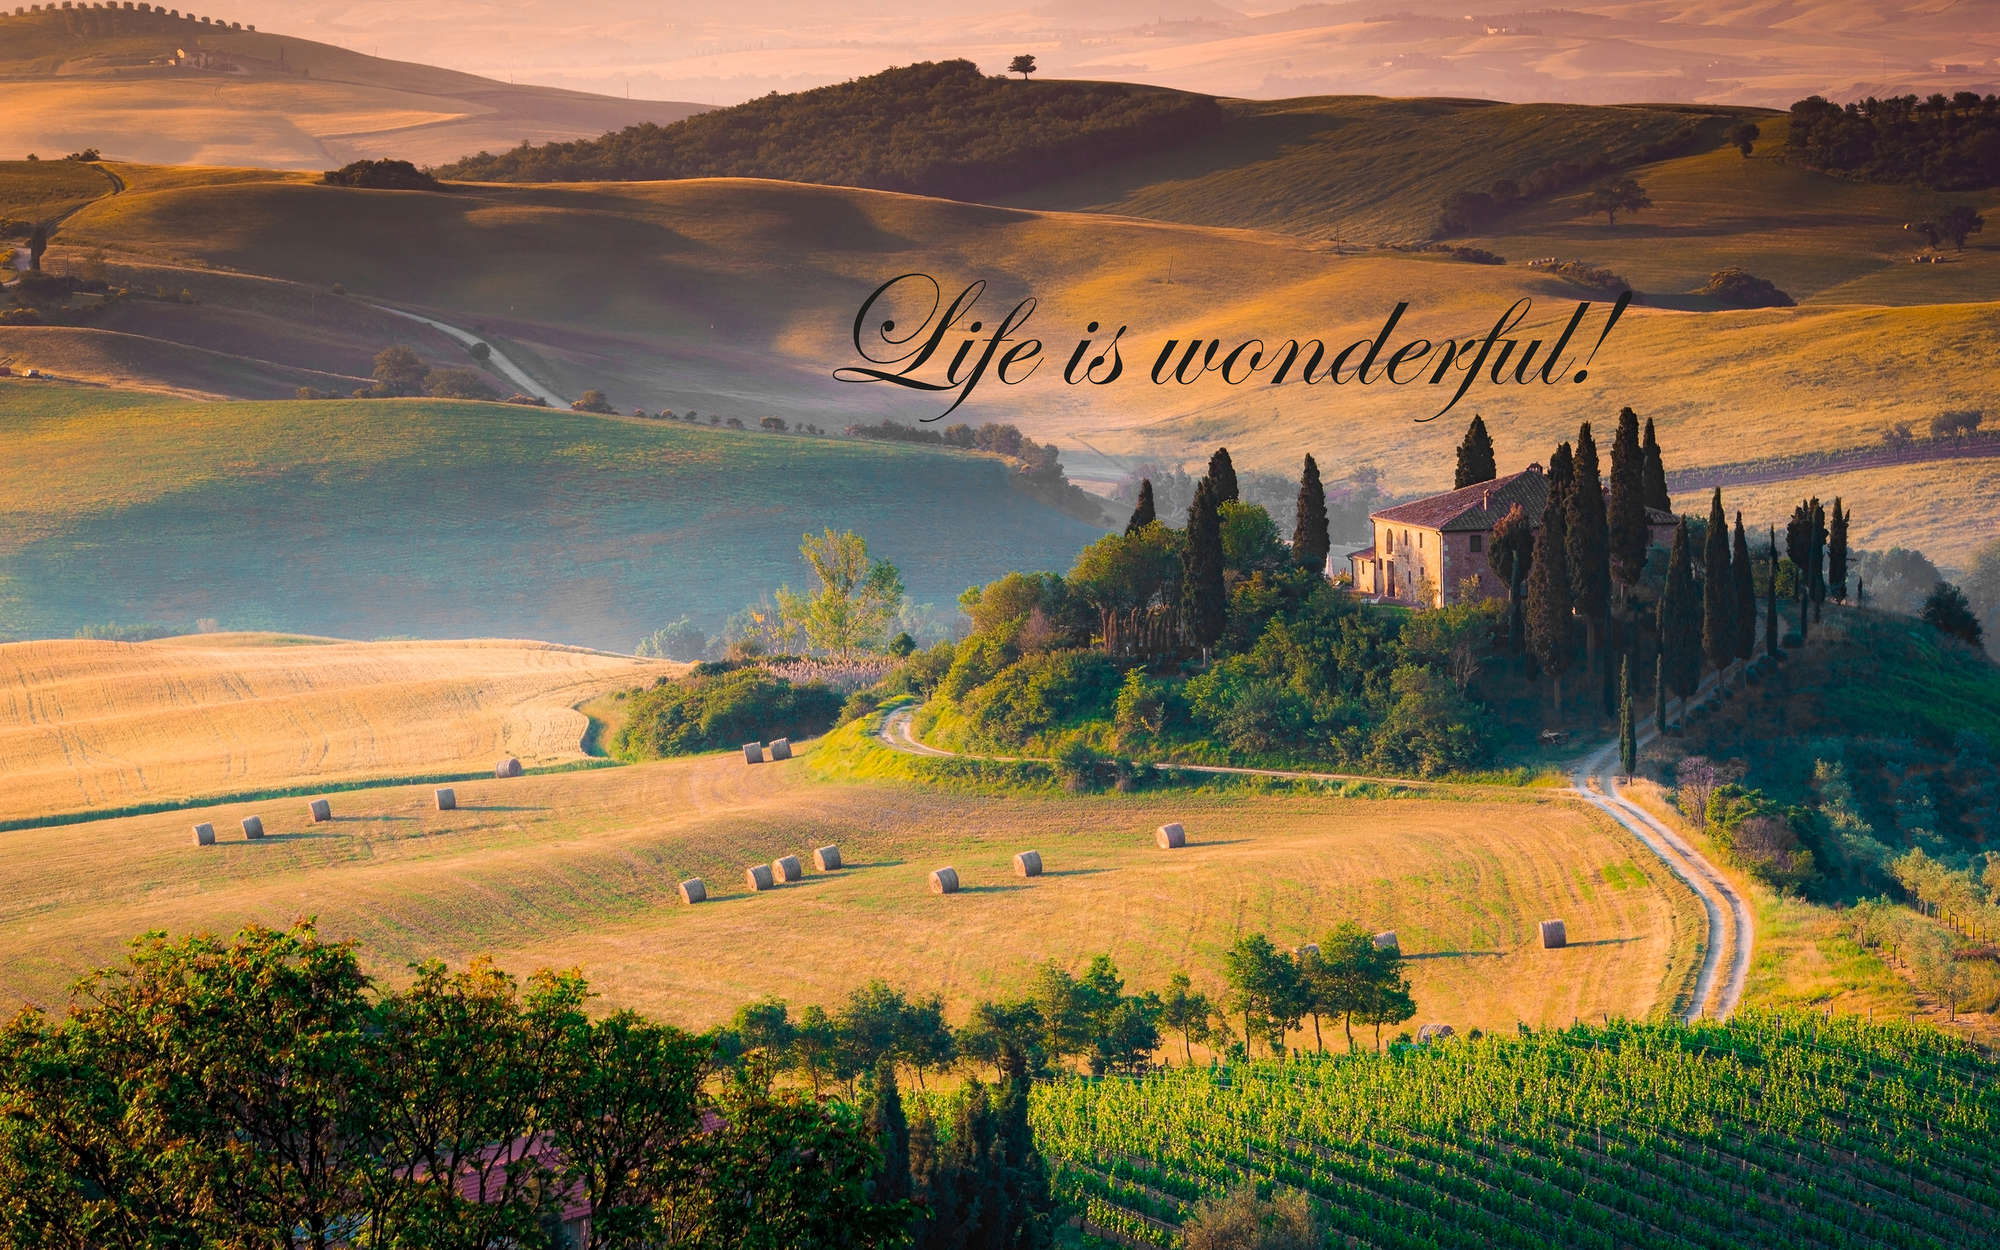             Fototapete Toskana mit Schriftzug "Life is wonderful!" – Premium Glattvlies
        